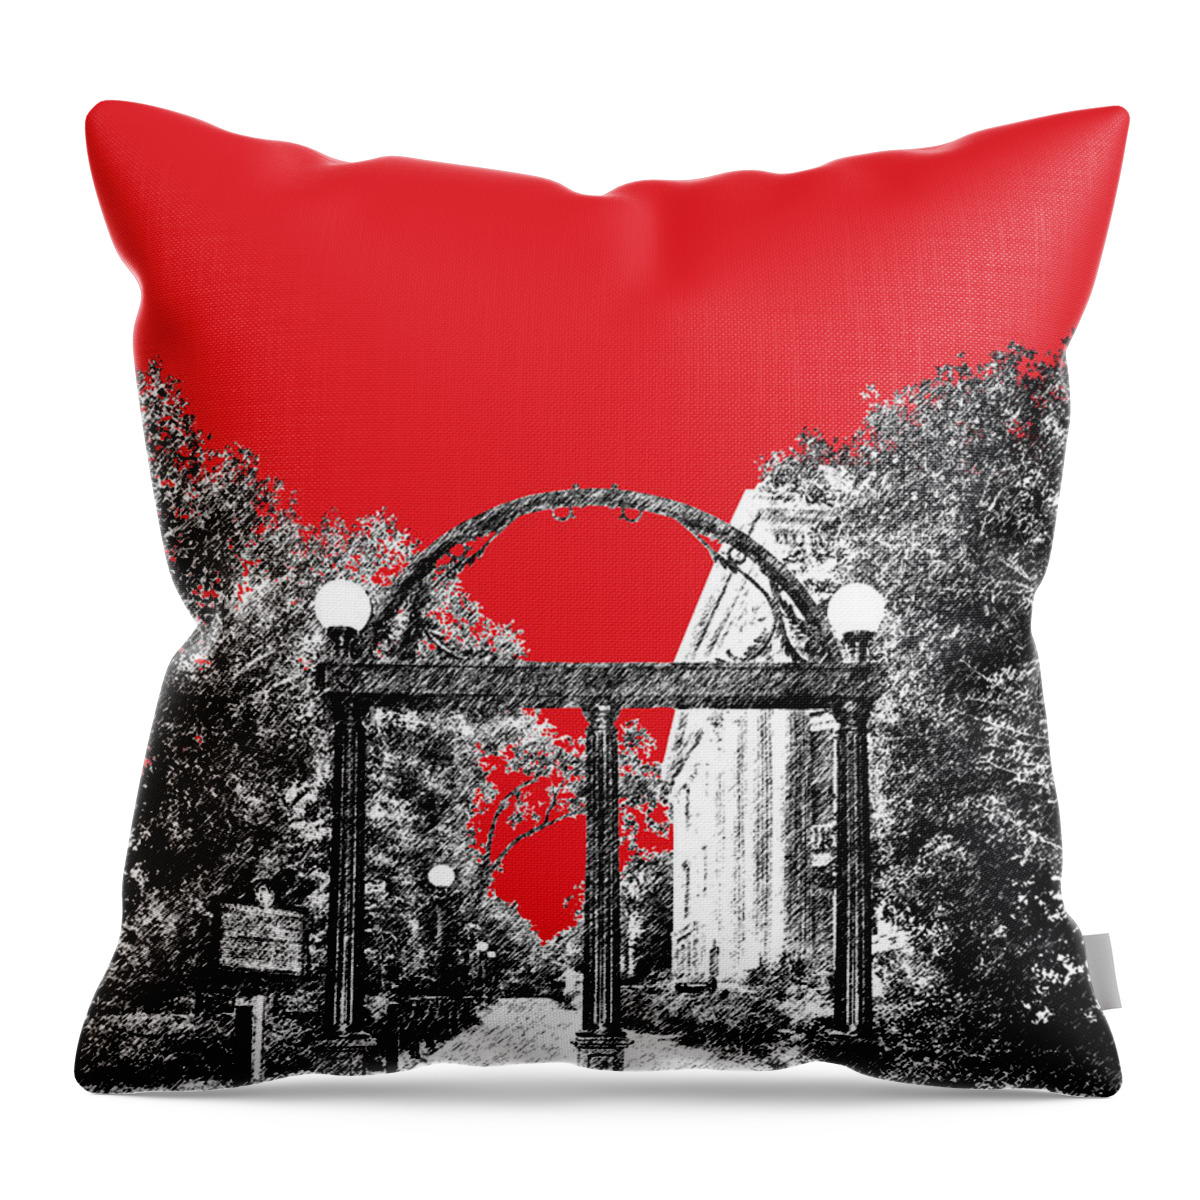 University Throw Pillow featuring the digital art University of Georgia - Georgia Arch - Red by DB Artist